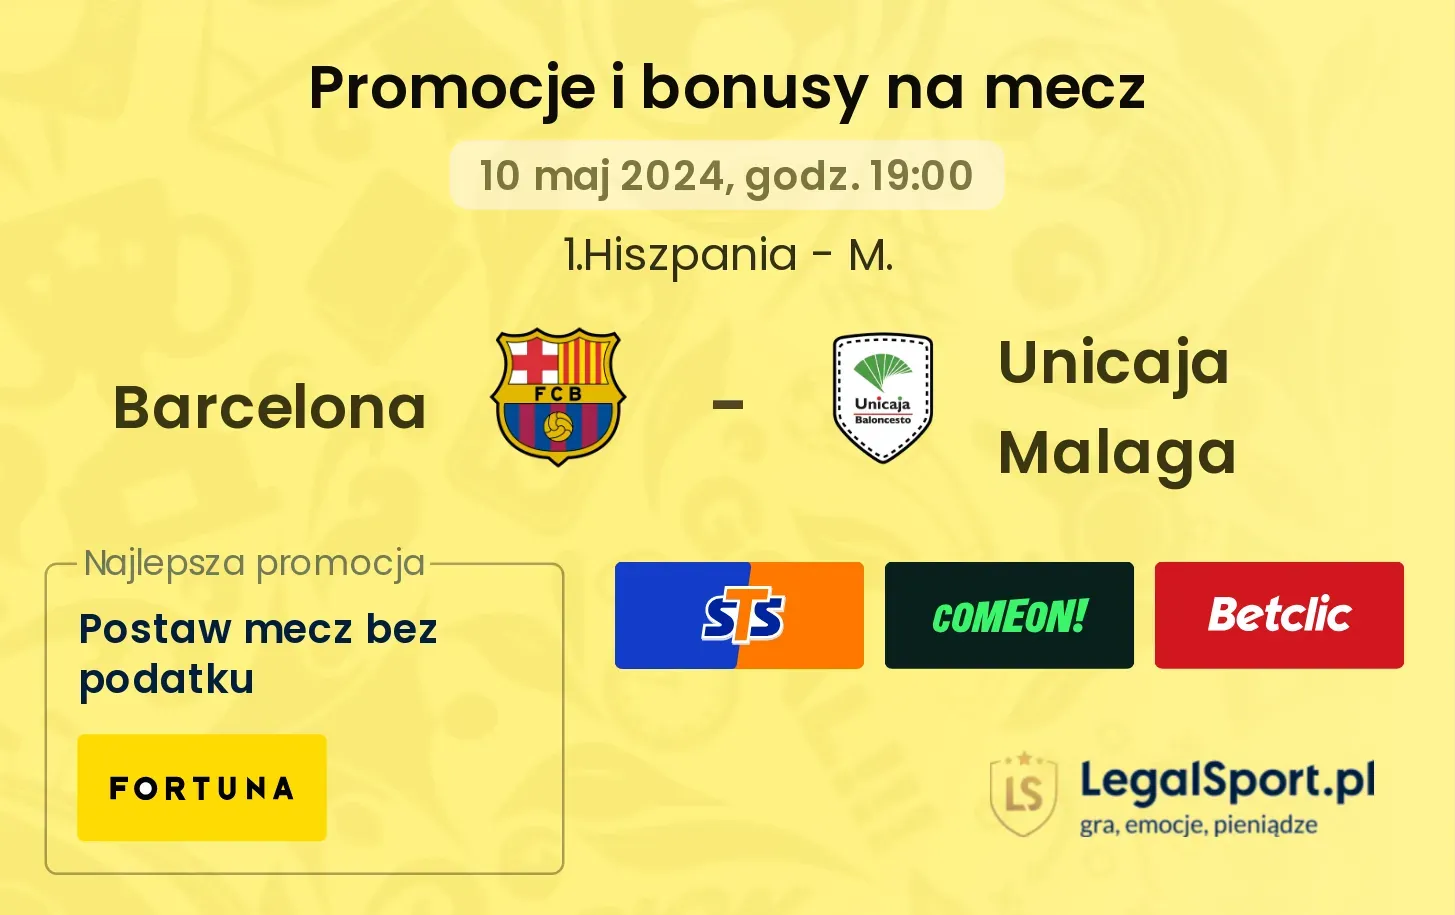 Barcelona - Unicaja Malaga promocje bonusy na mecz